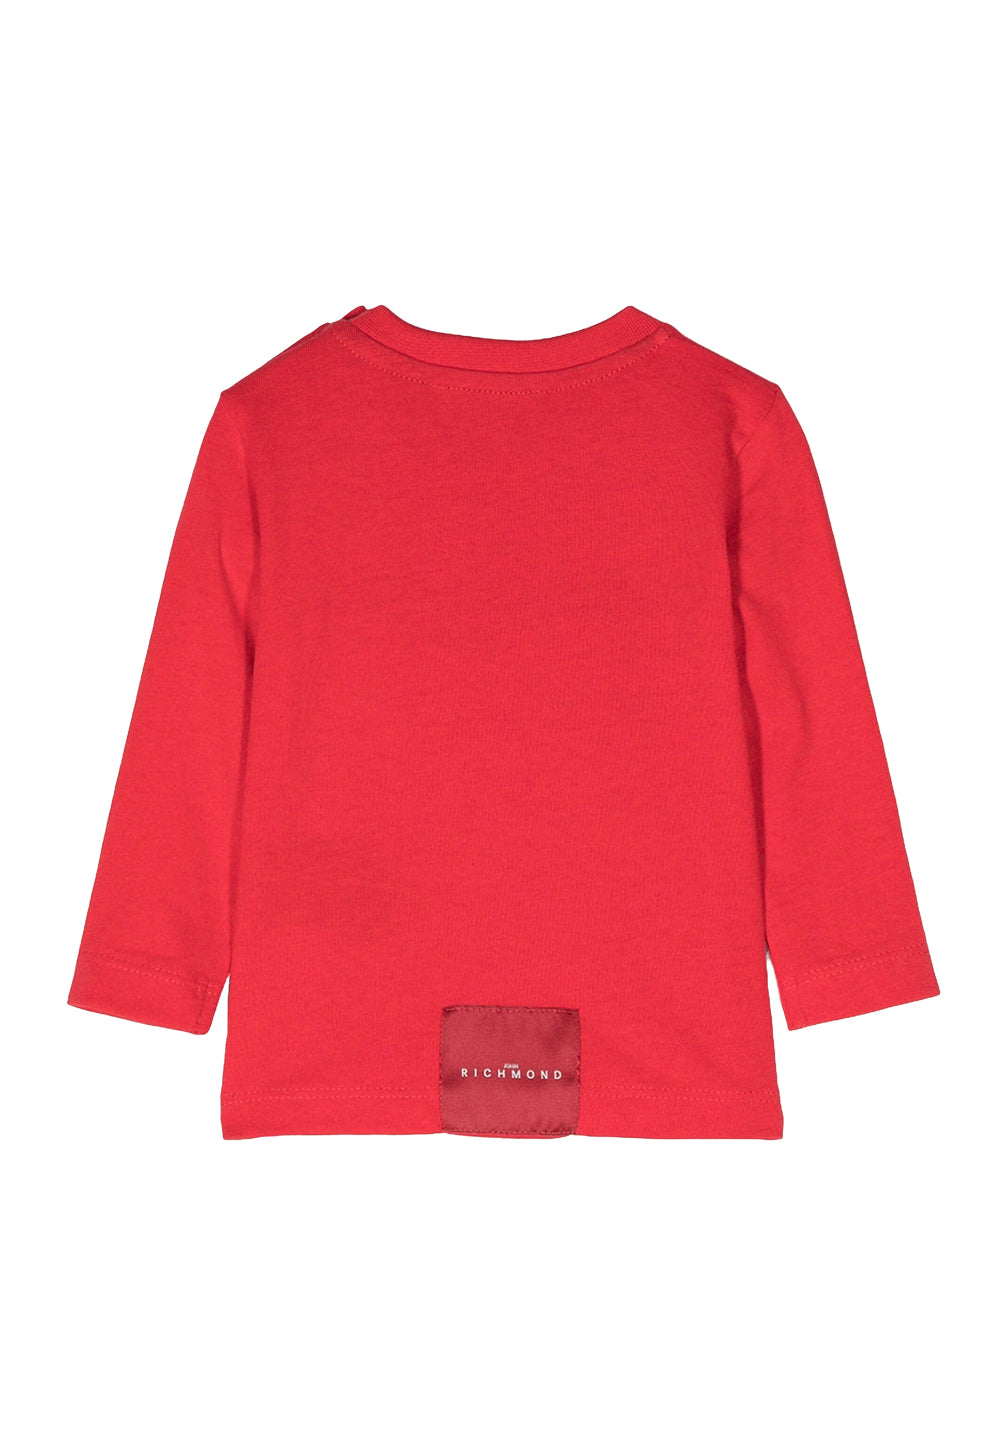 Red t-shirt for newborn